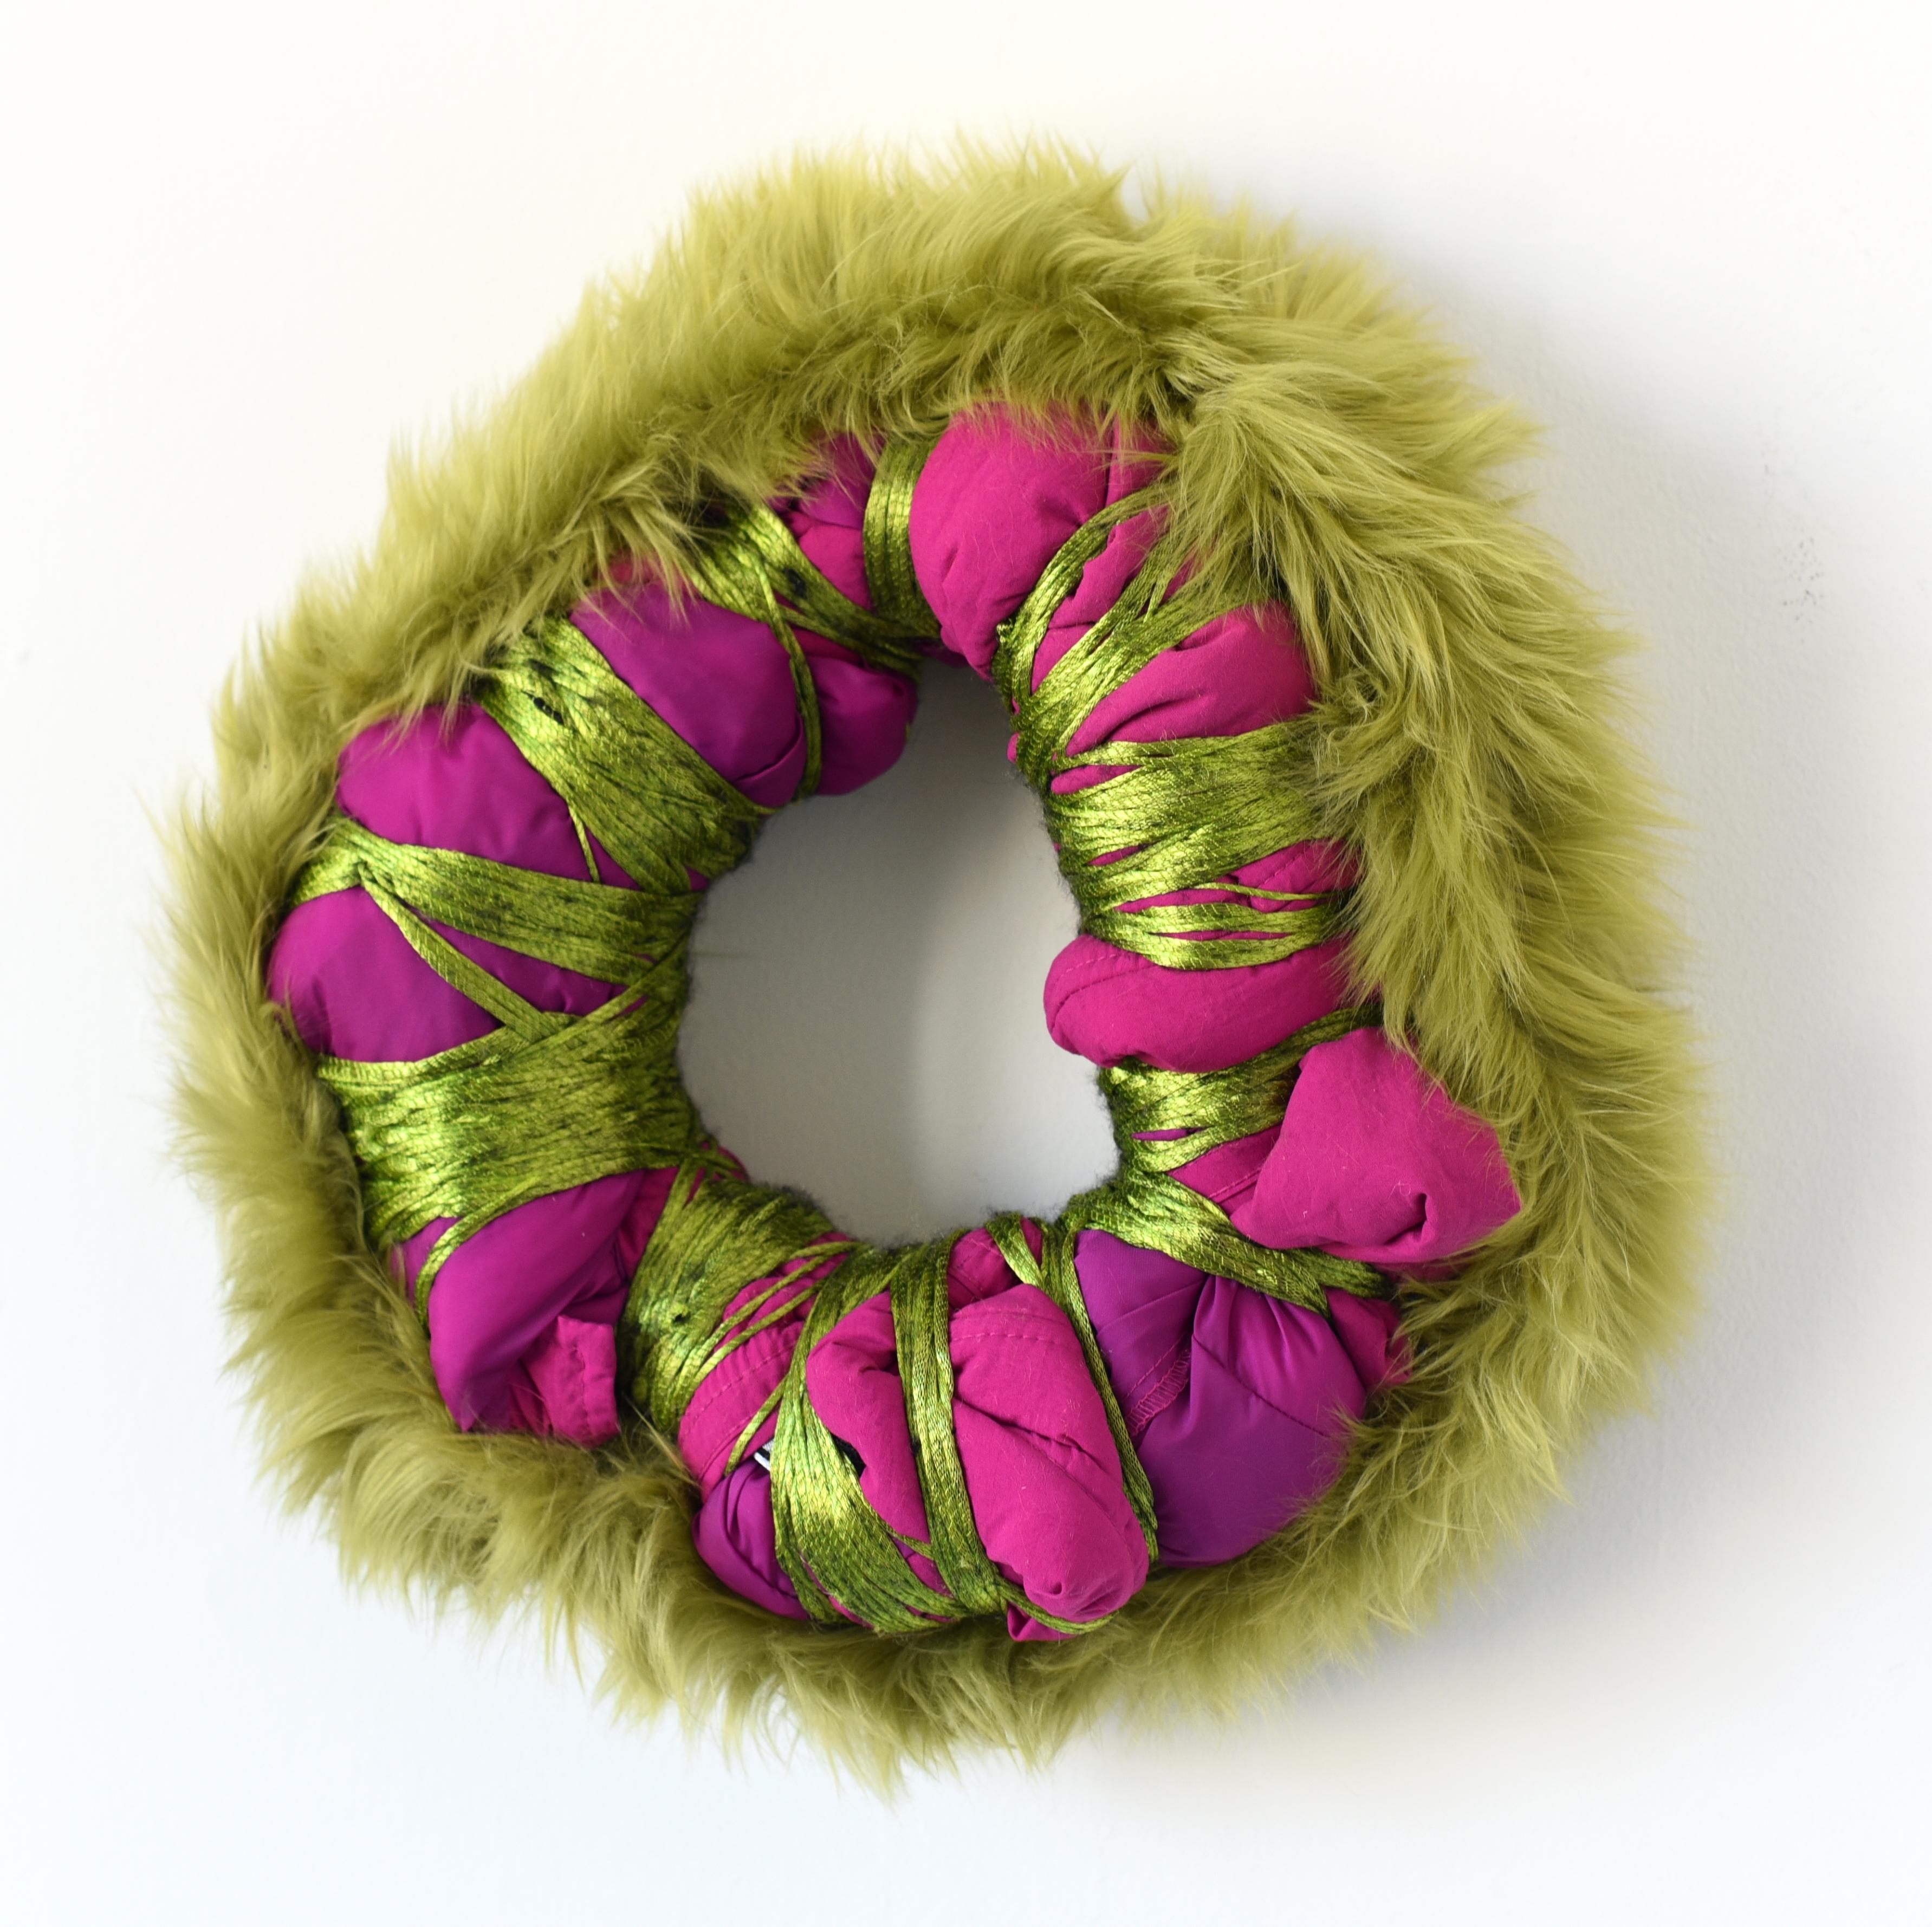  Untitled (circular wreath mixed media abstract wall sculpture fabric green pink